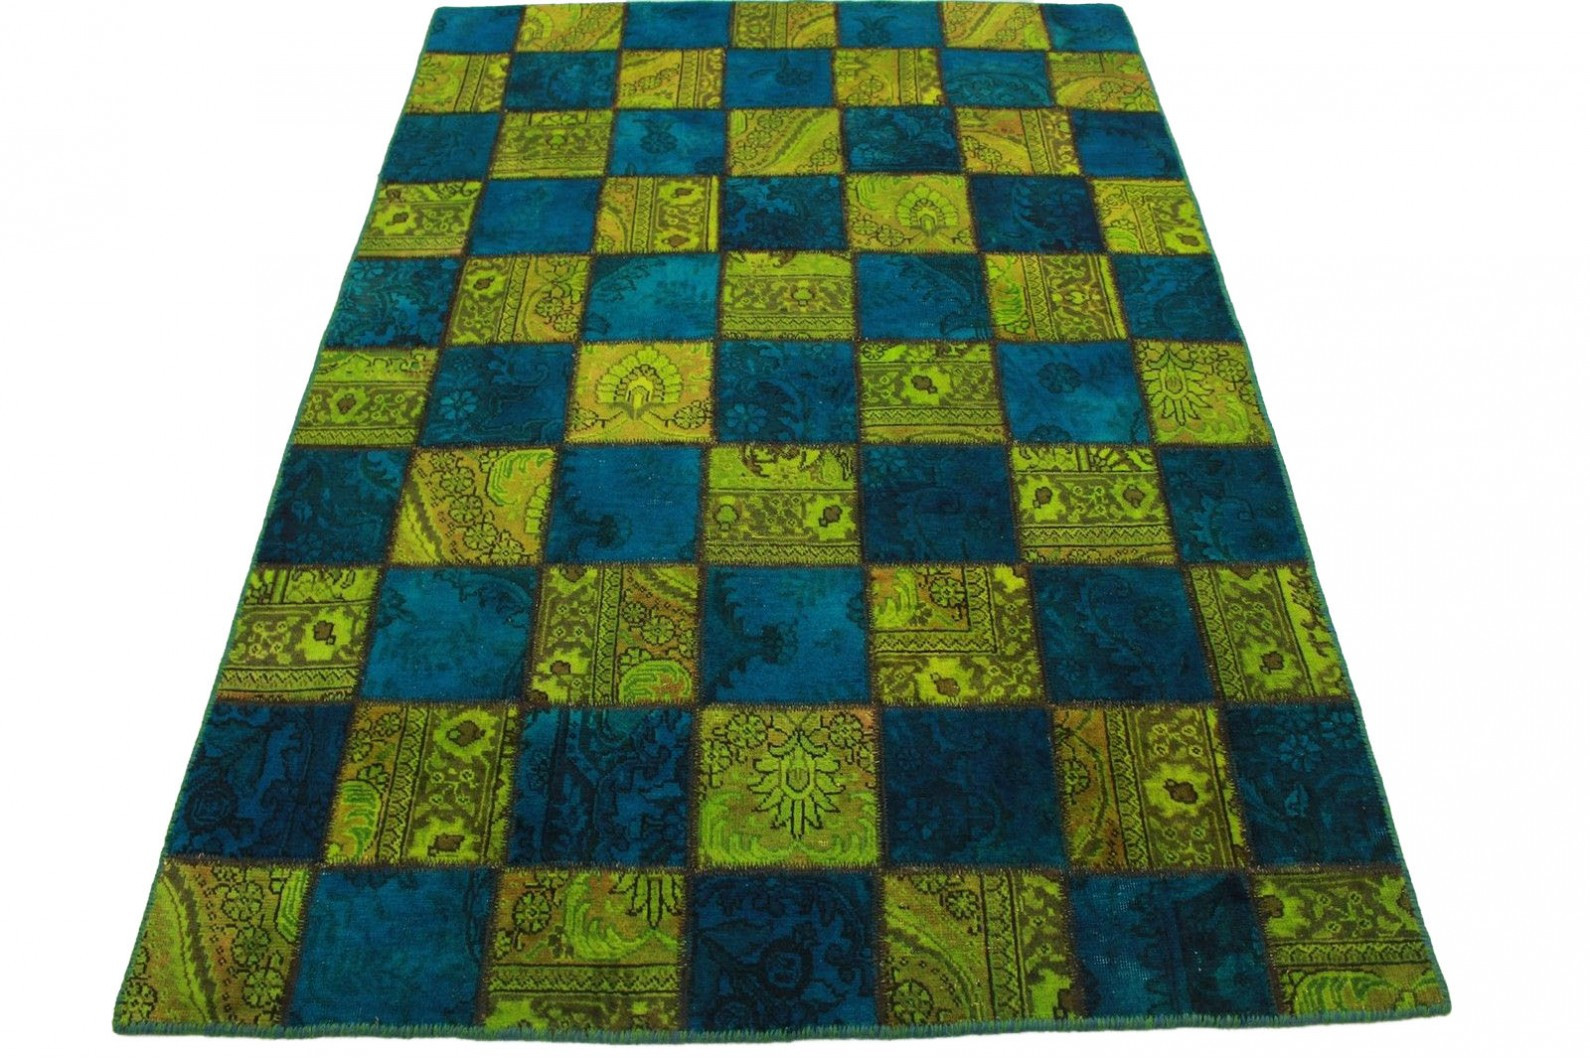 Teppich Blau Grün
 Patchwork Teppich Grün Blau in 200x140cm 1001 1972 bei